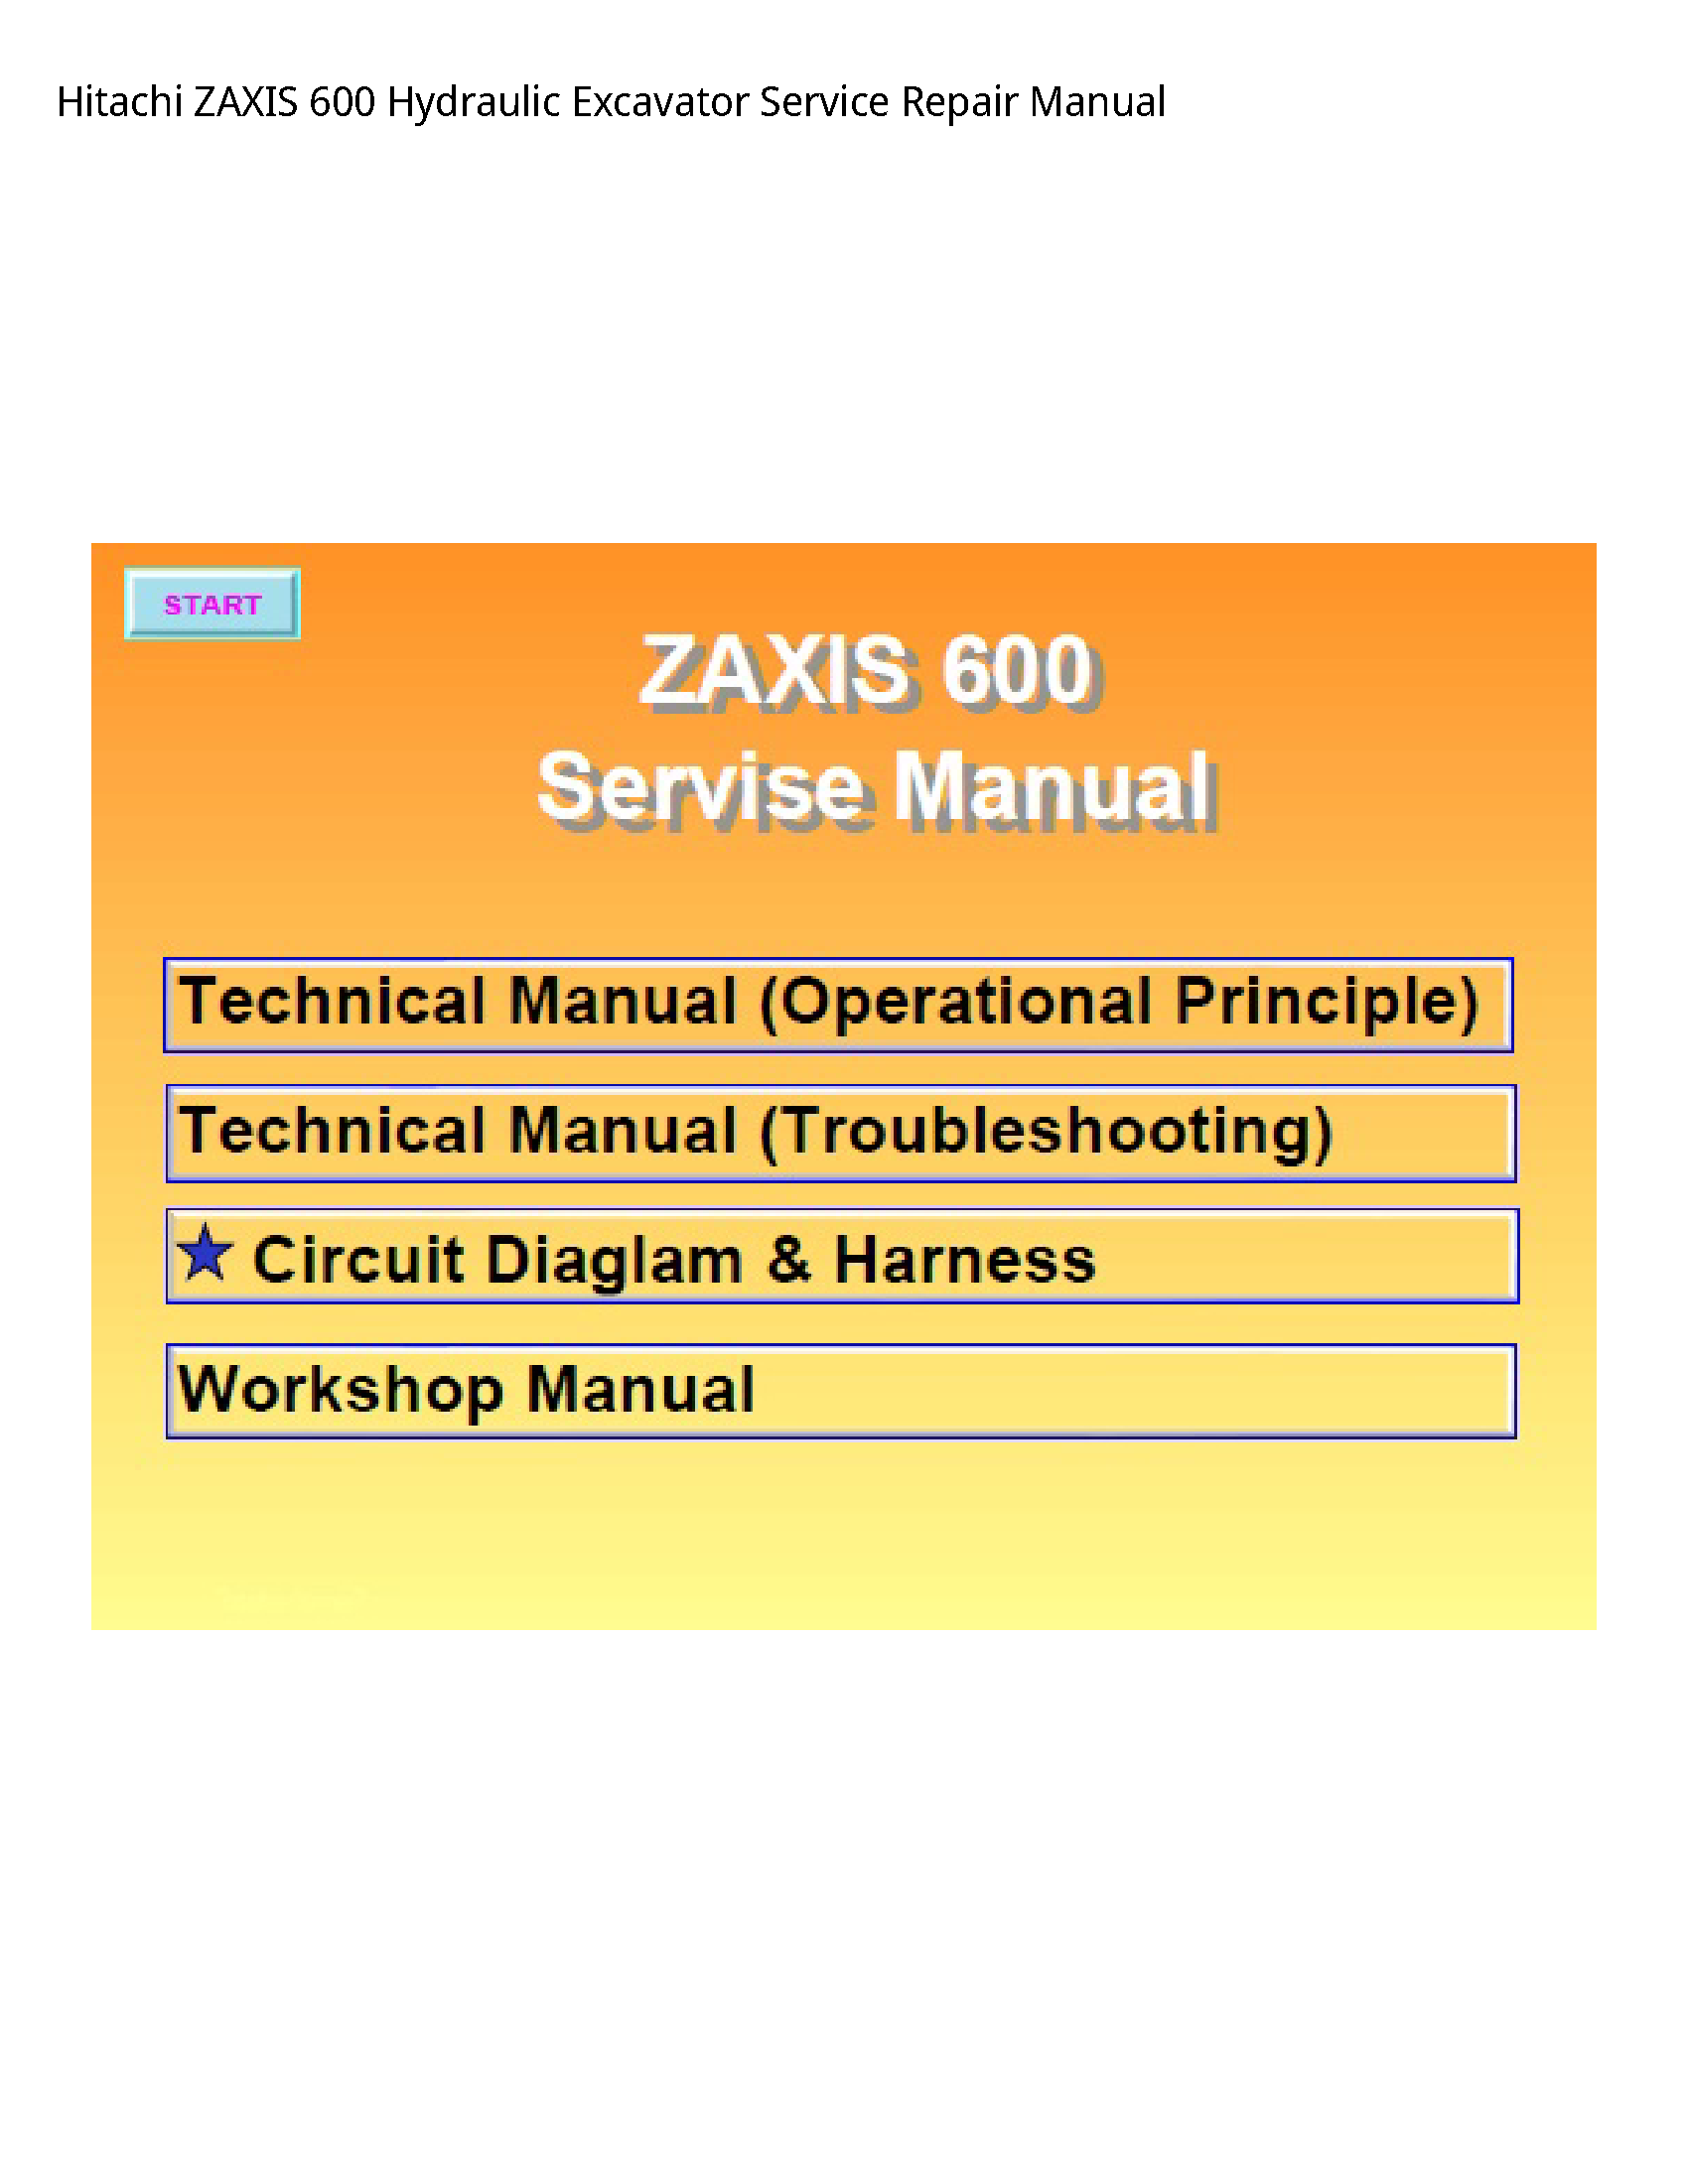 Hitachi 600 ZAXIS Hydraulic Excavator manual